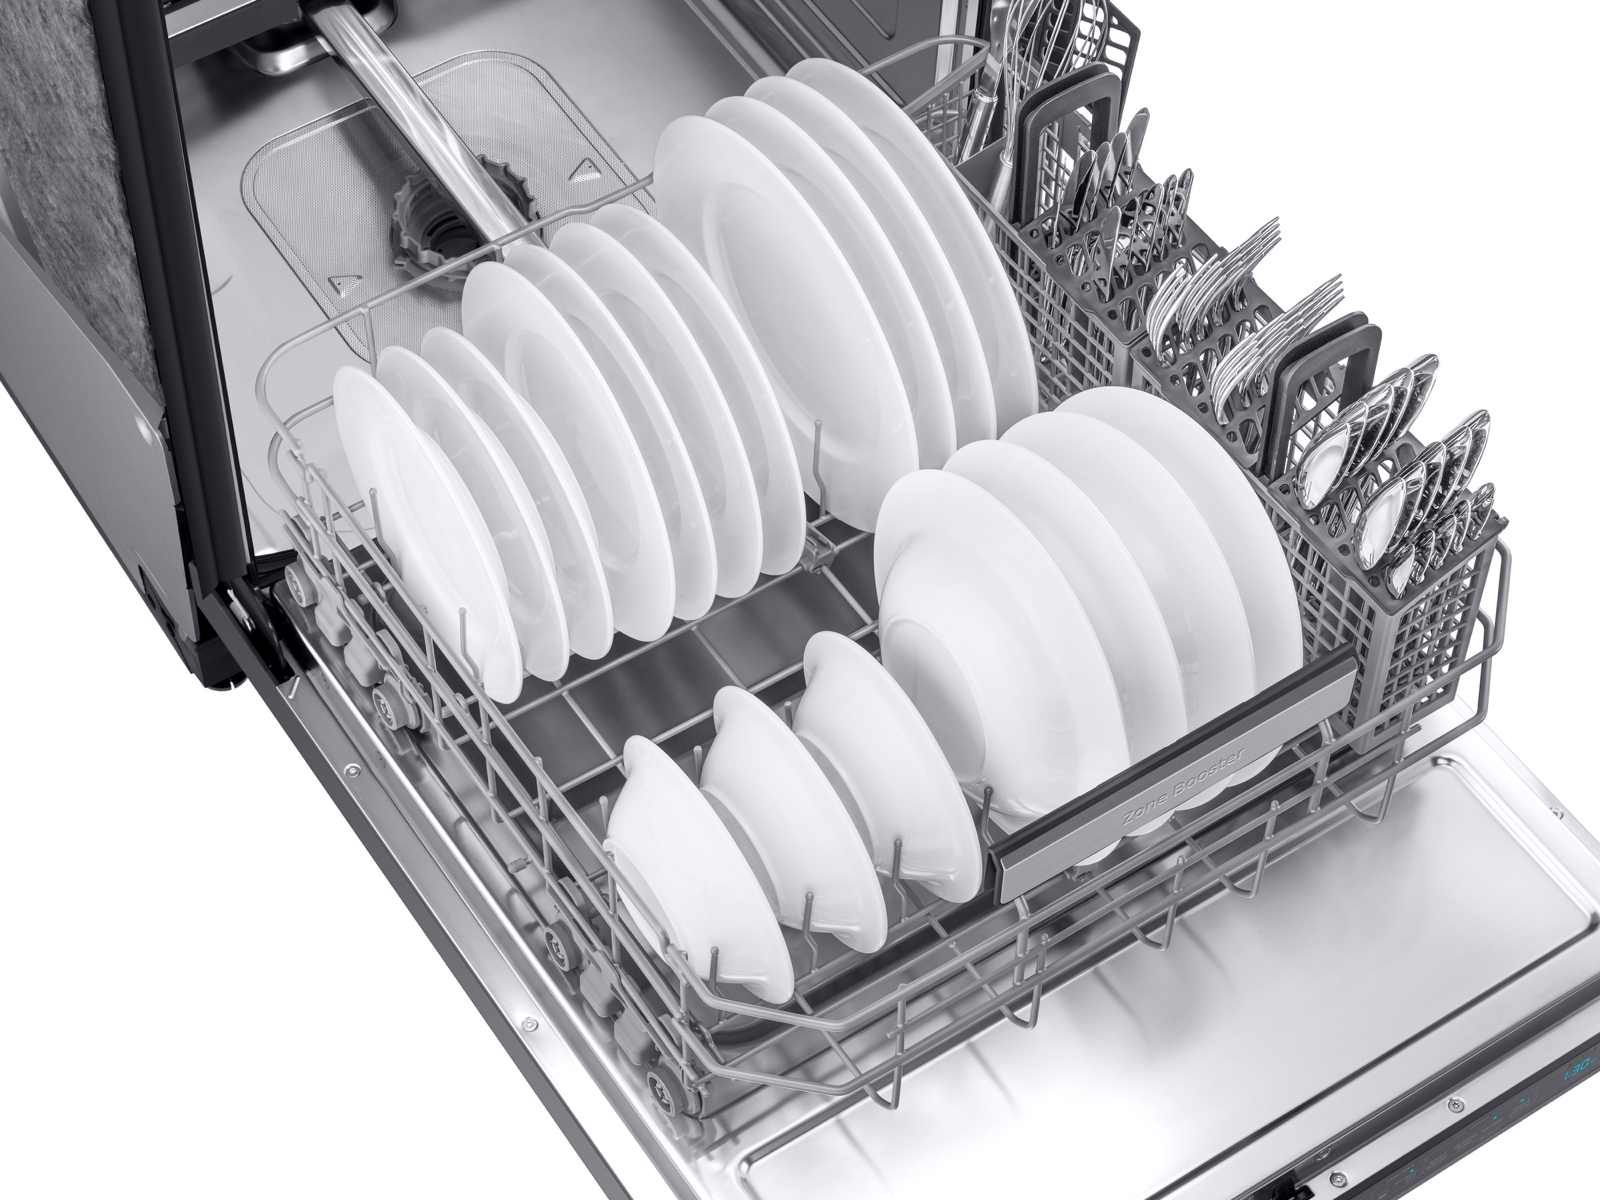 DW80R9950US/AA, Smart Linear Wash 39dBA Dishwasher in Stainless Steel